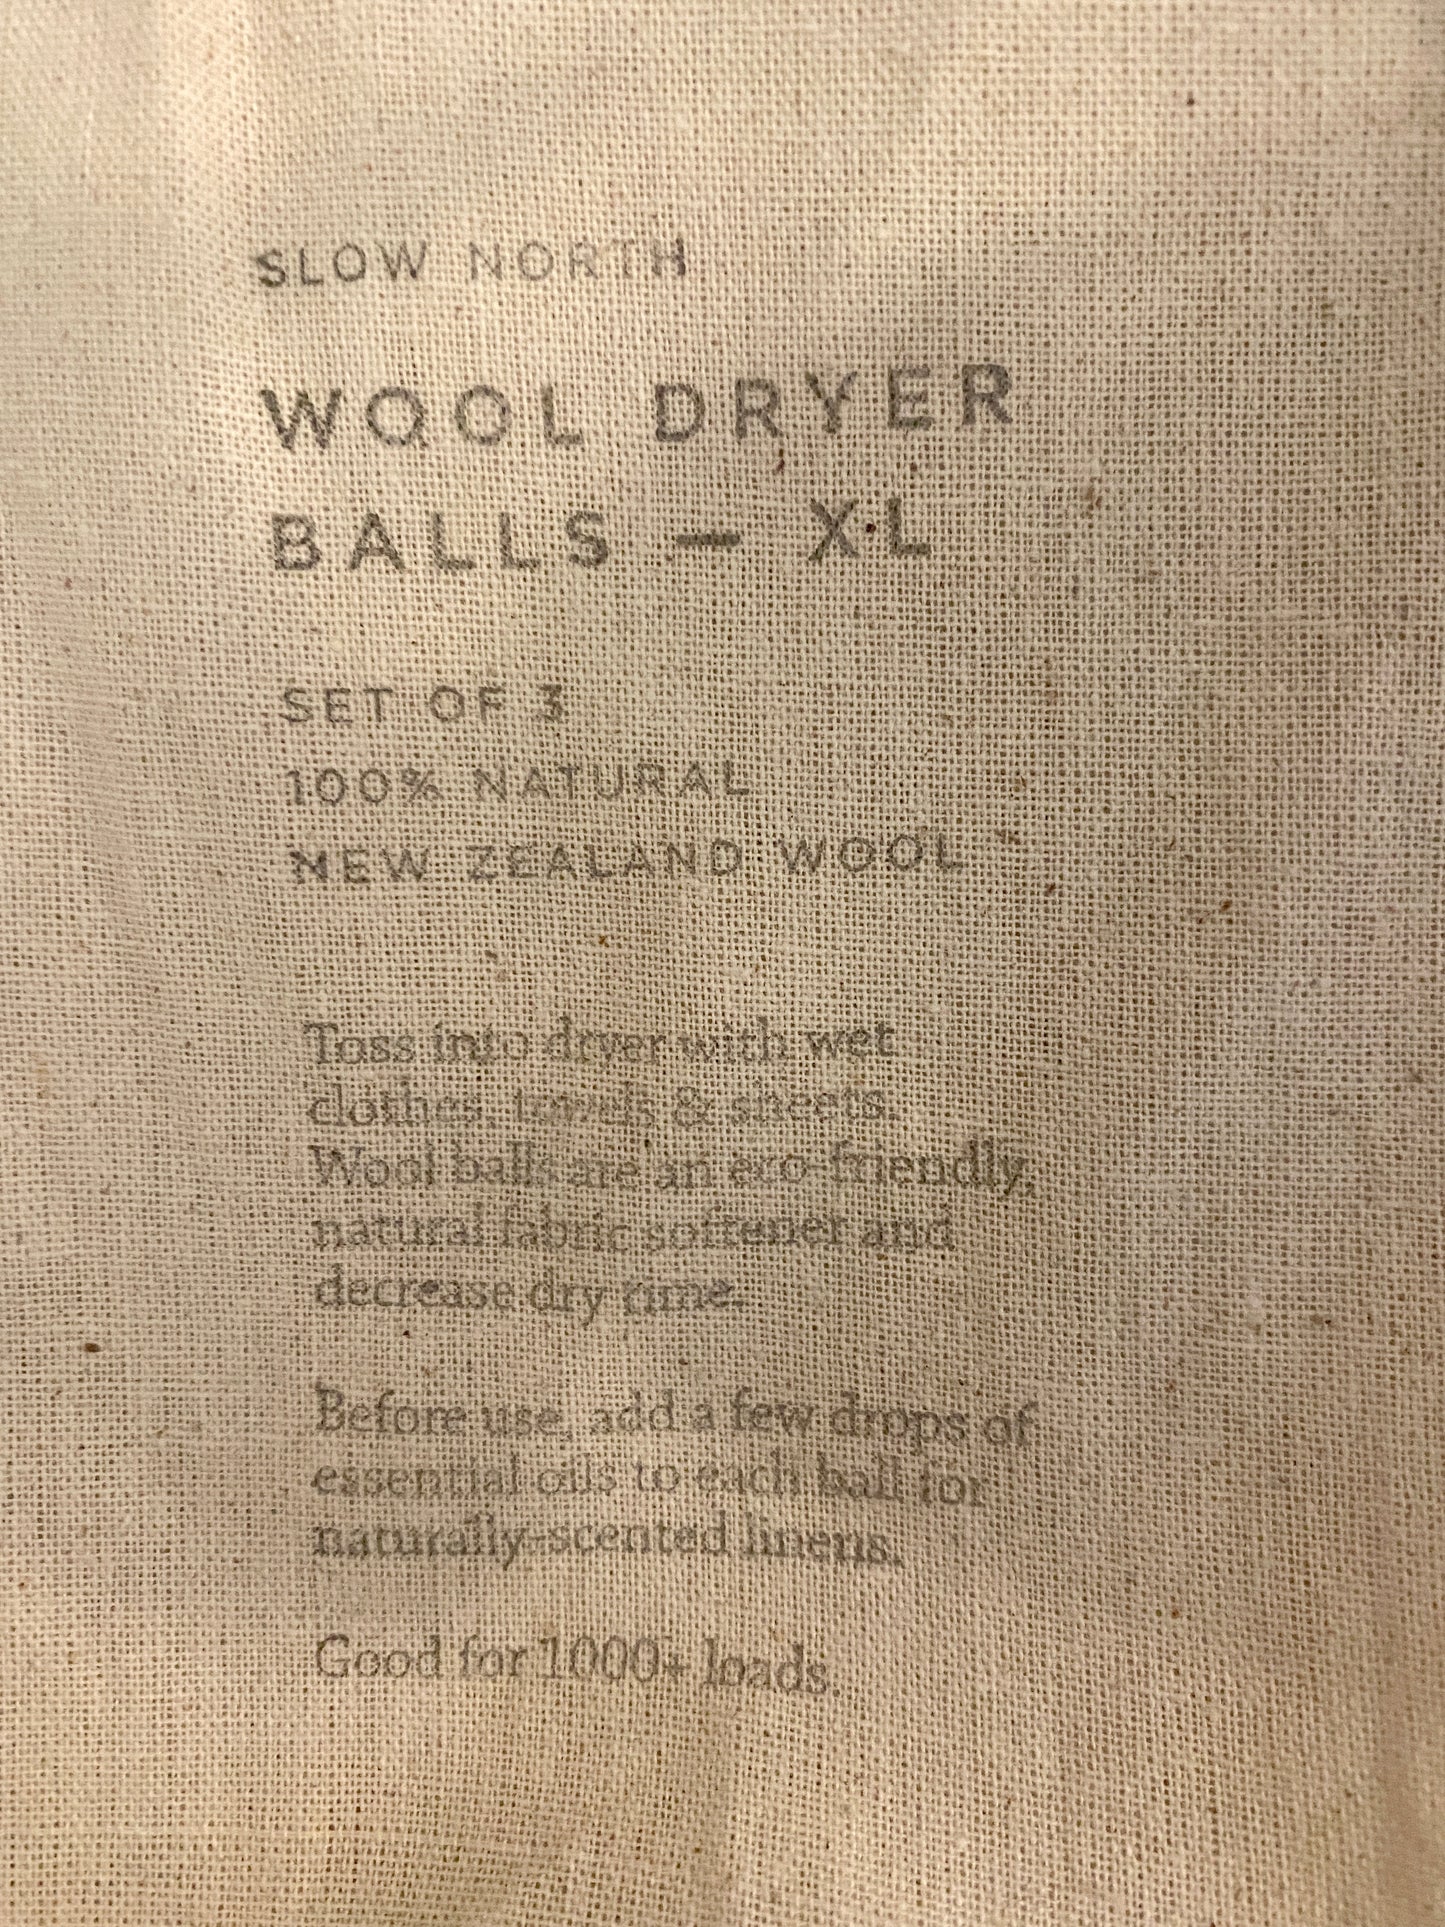 Slow North XL Wool Dryer Ball Set of 3